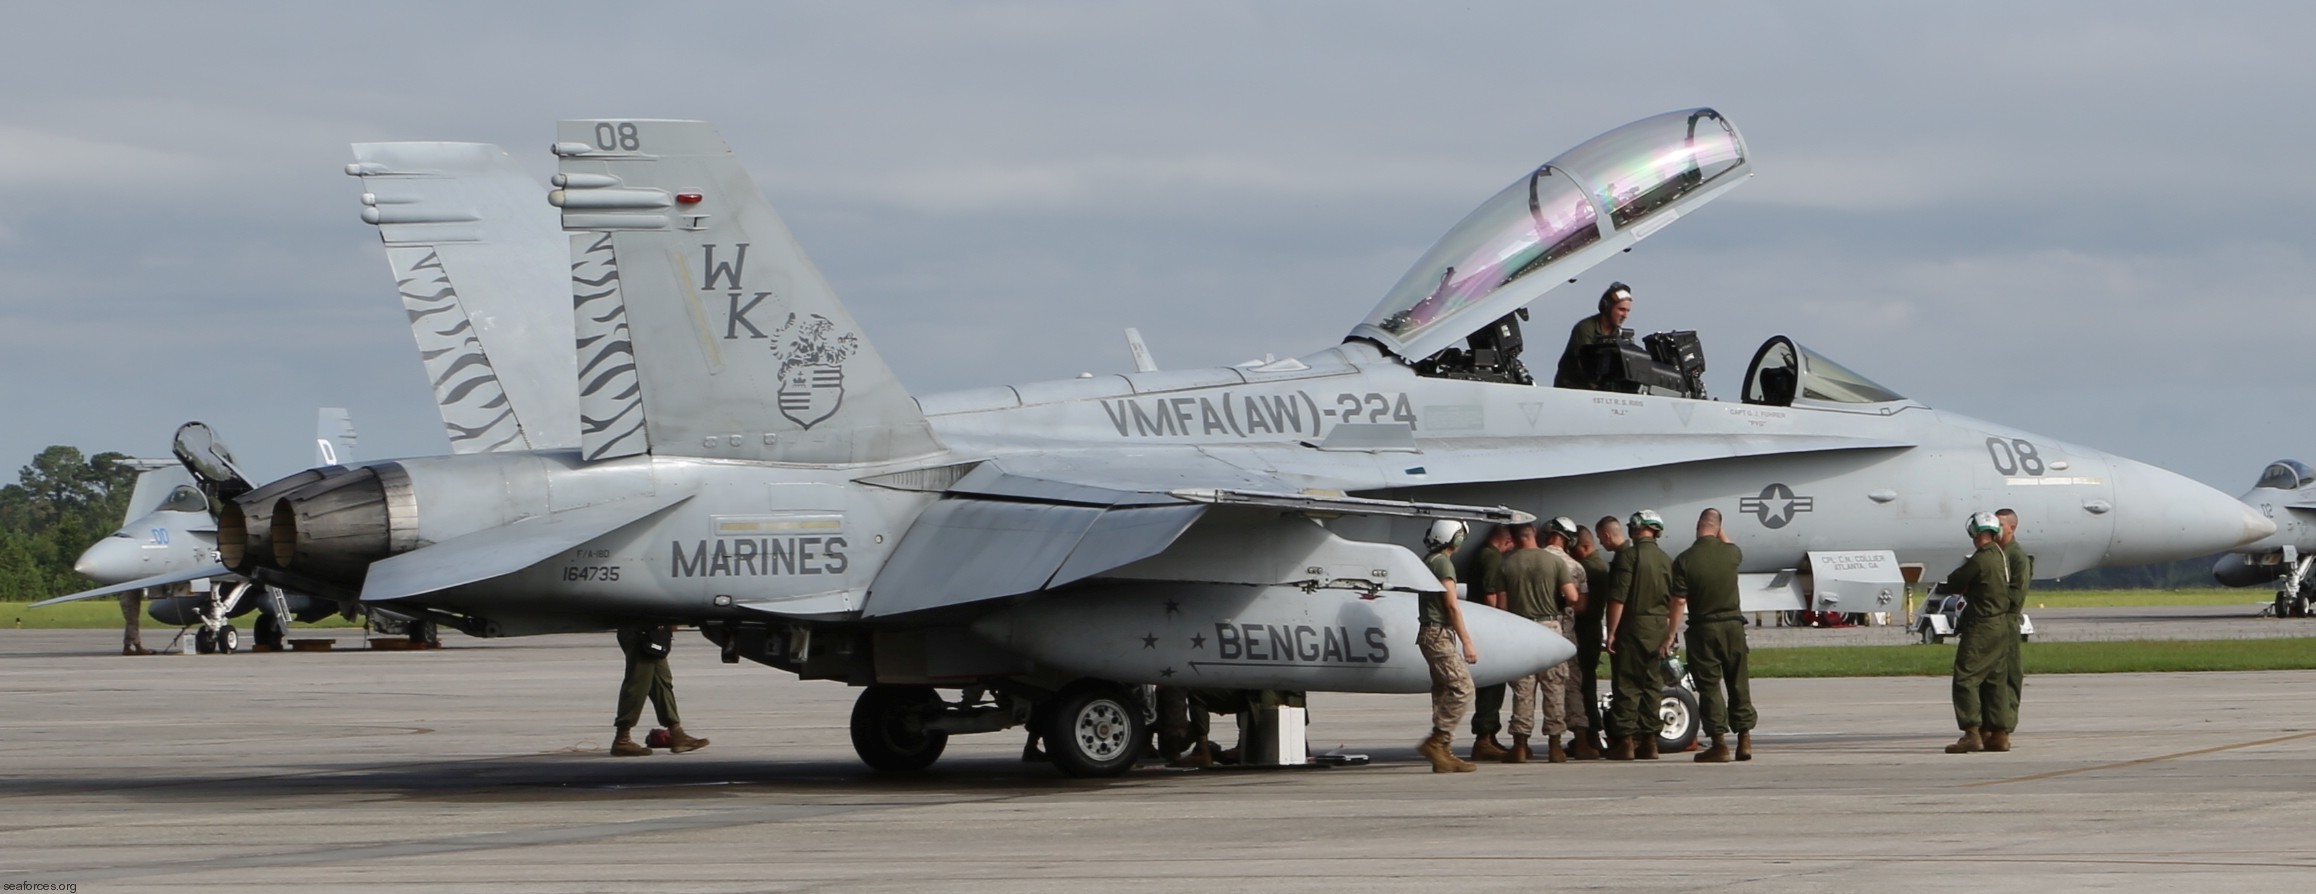 vmfa(aw)-224 bengals marine fighter attack squadron usmc f/a-18d hornet 27 mcas beaufort south carolina